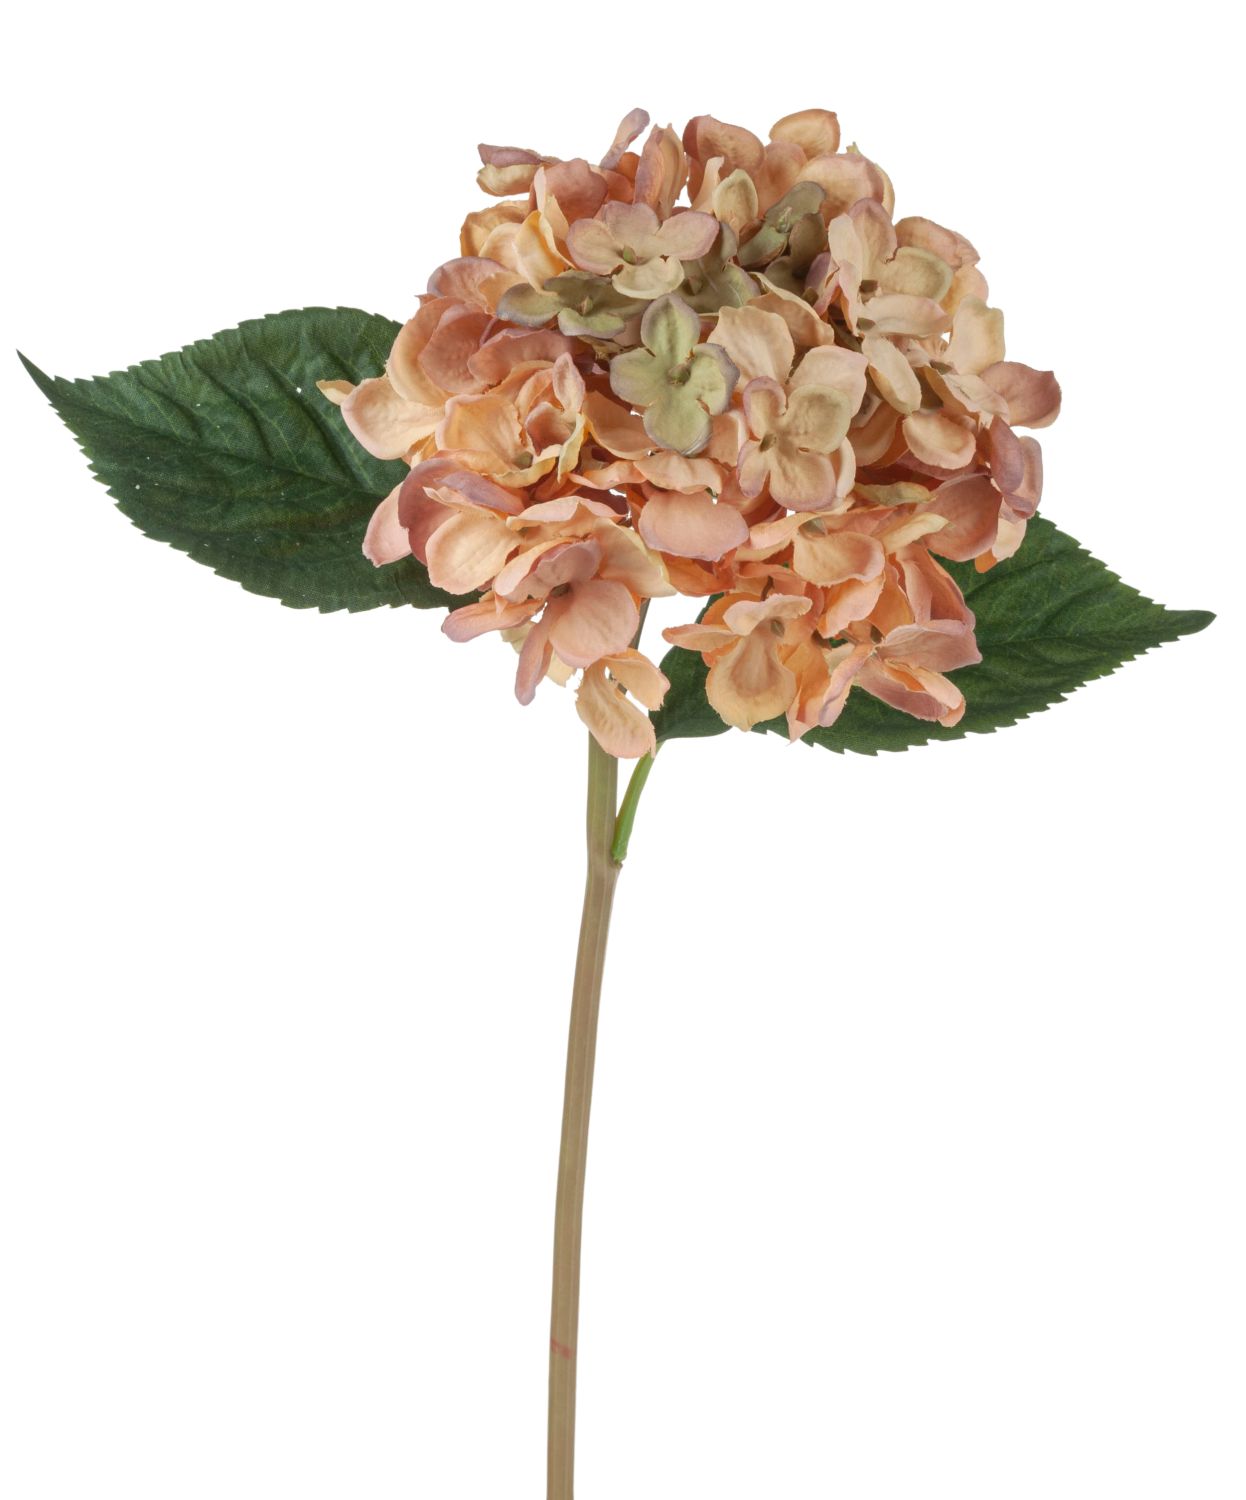 Kunstblume Hortensie, 43 cm, dunkelrosa-grün